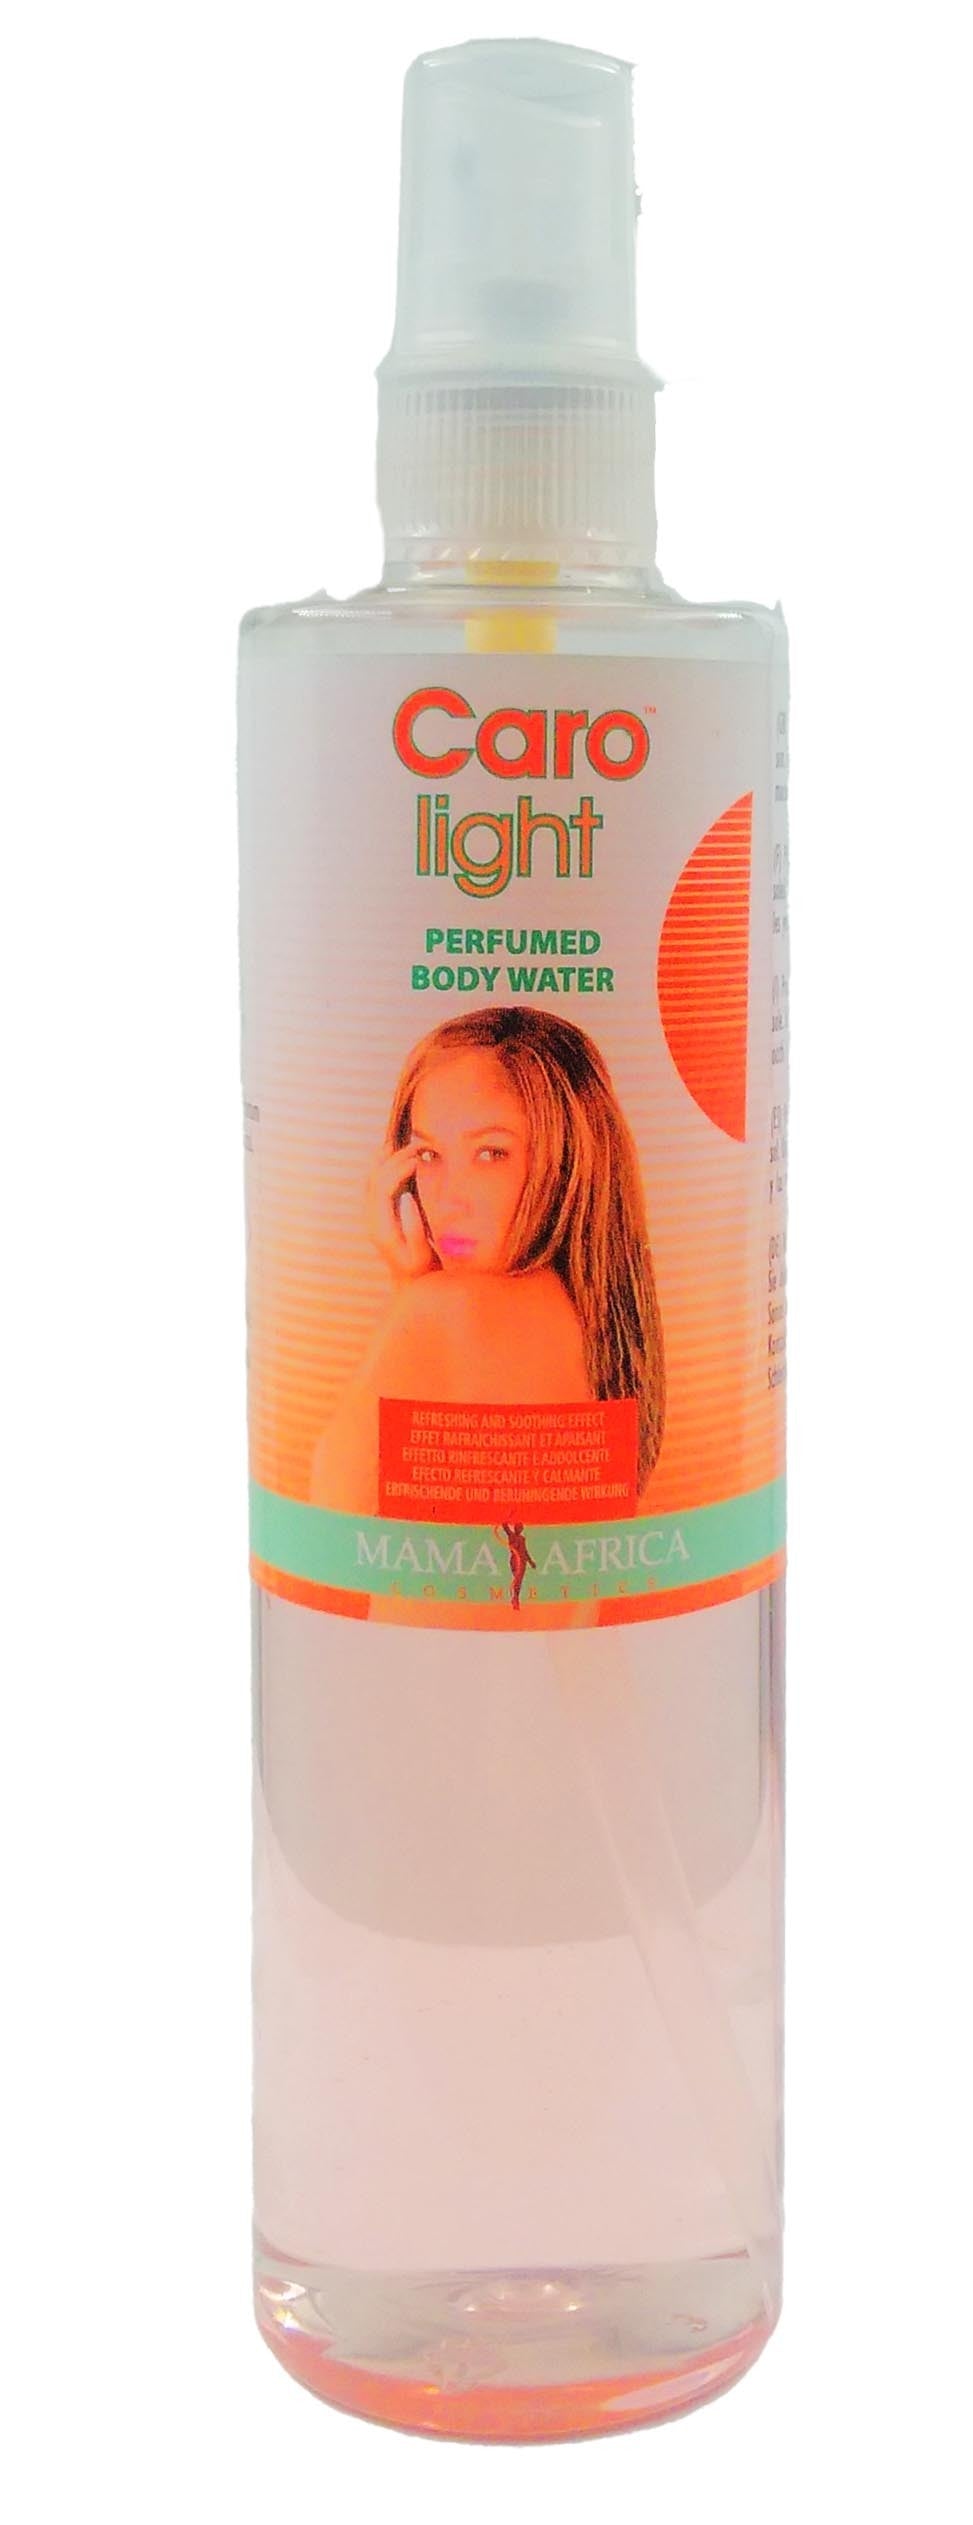 (COSMETICS SKIN CARE) MA Caro Light Perfumed Body Water 250 ml.